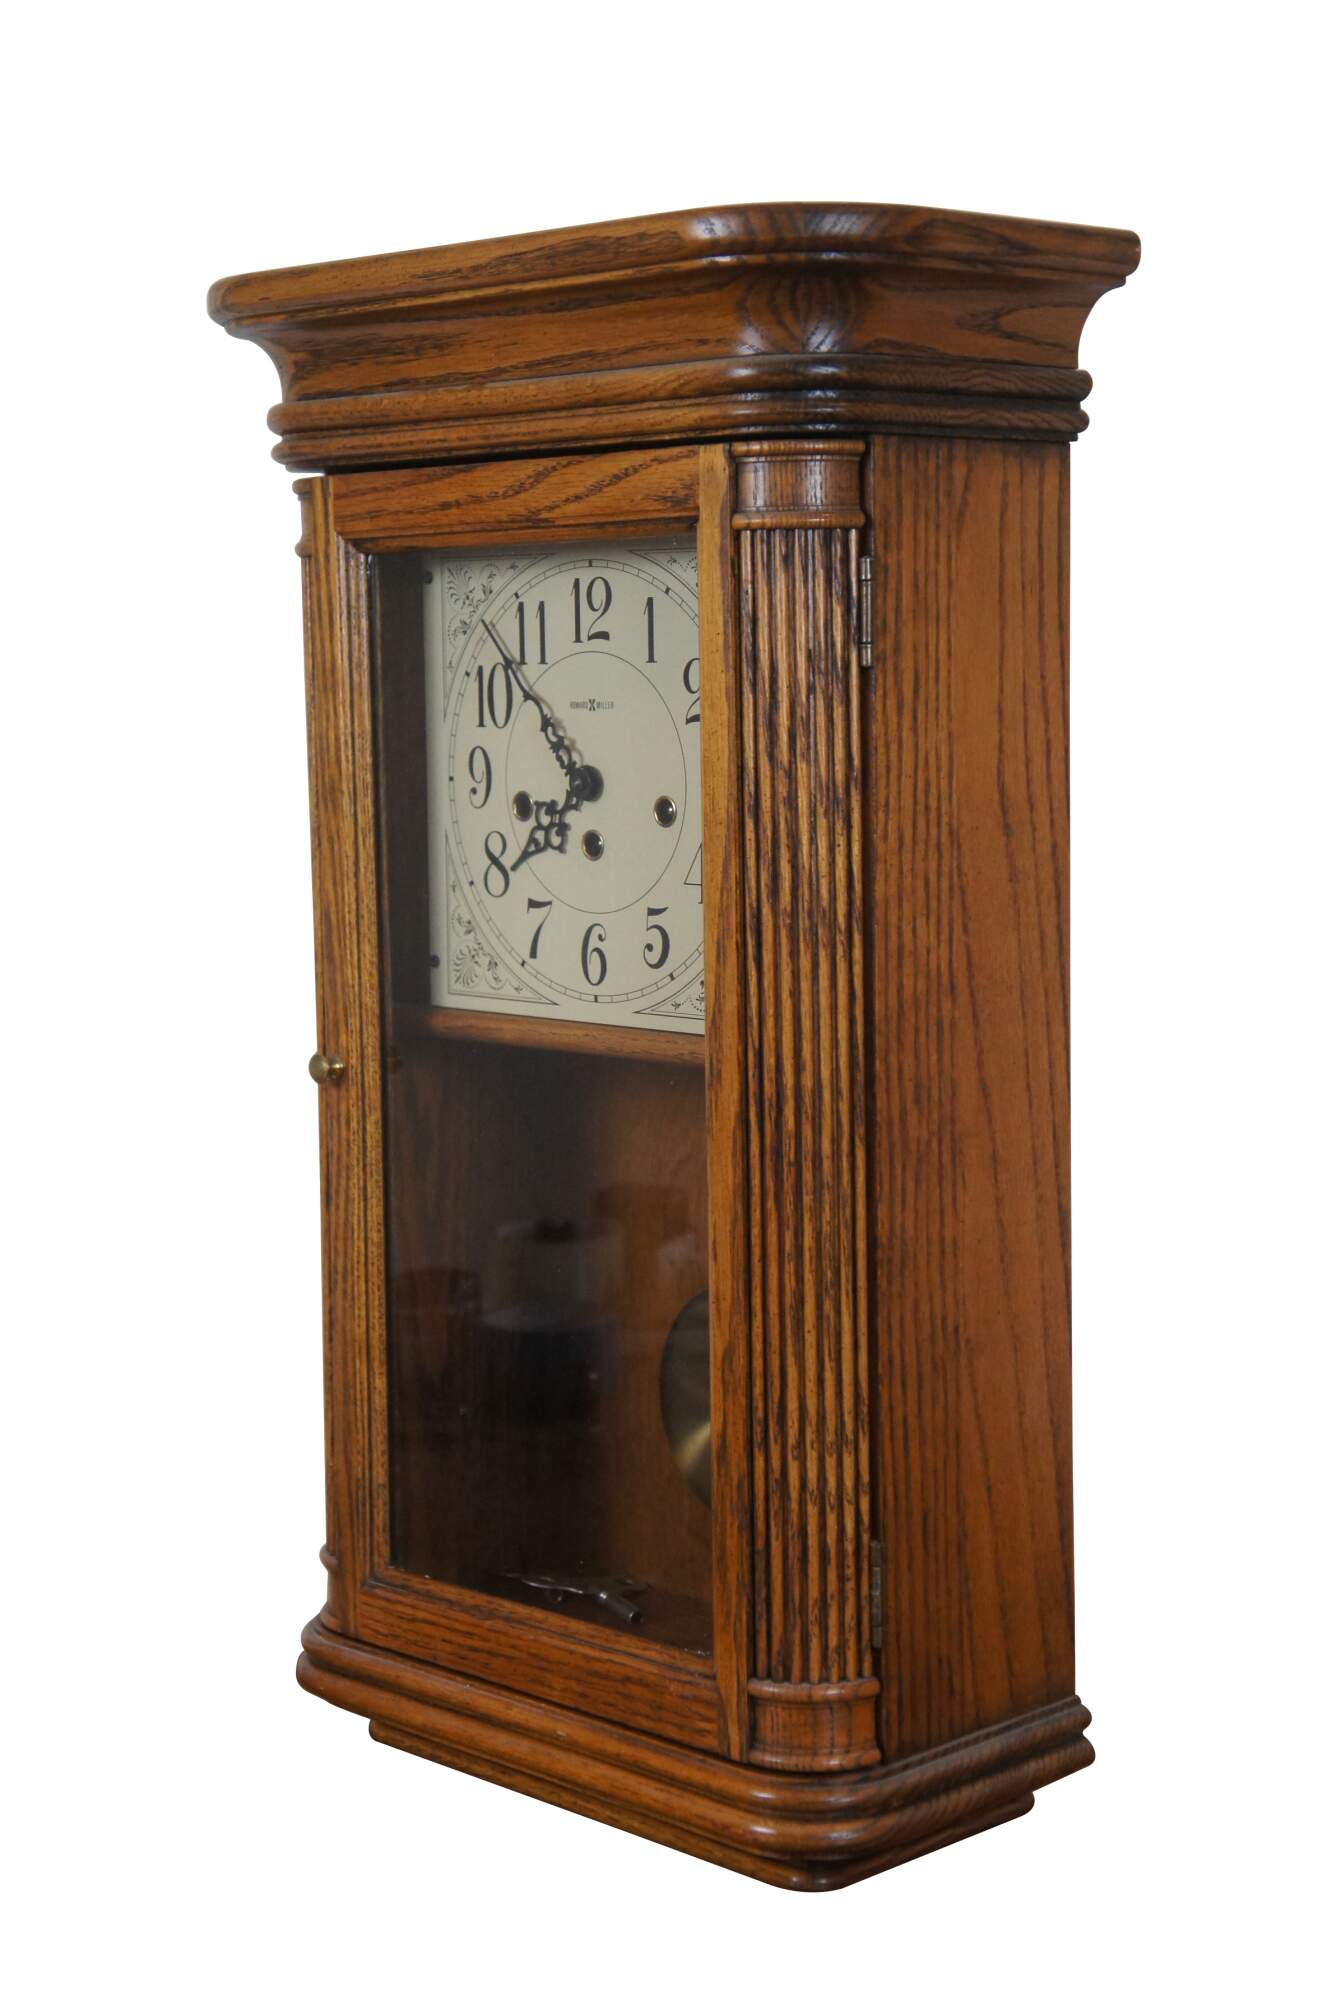 Howard Miller Sandringham Wall Clock 613-108 – Oak Yorkshire, Key Wound  Single Chime Movement